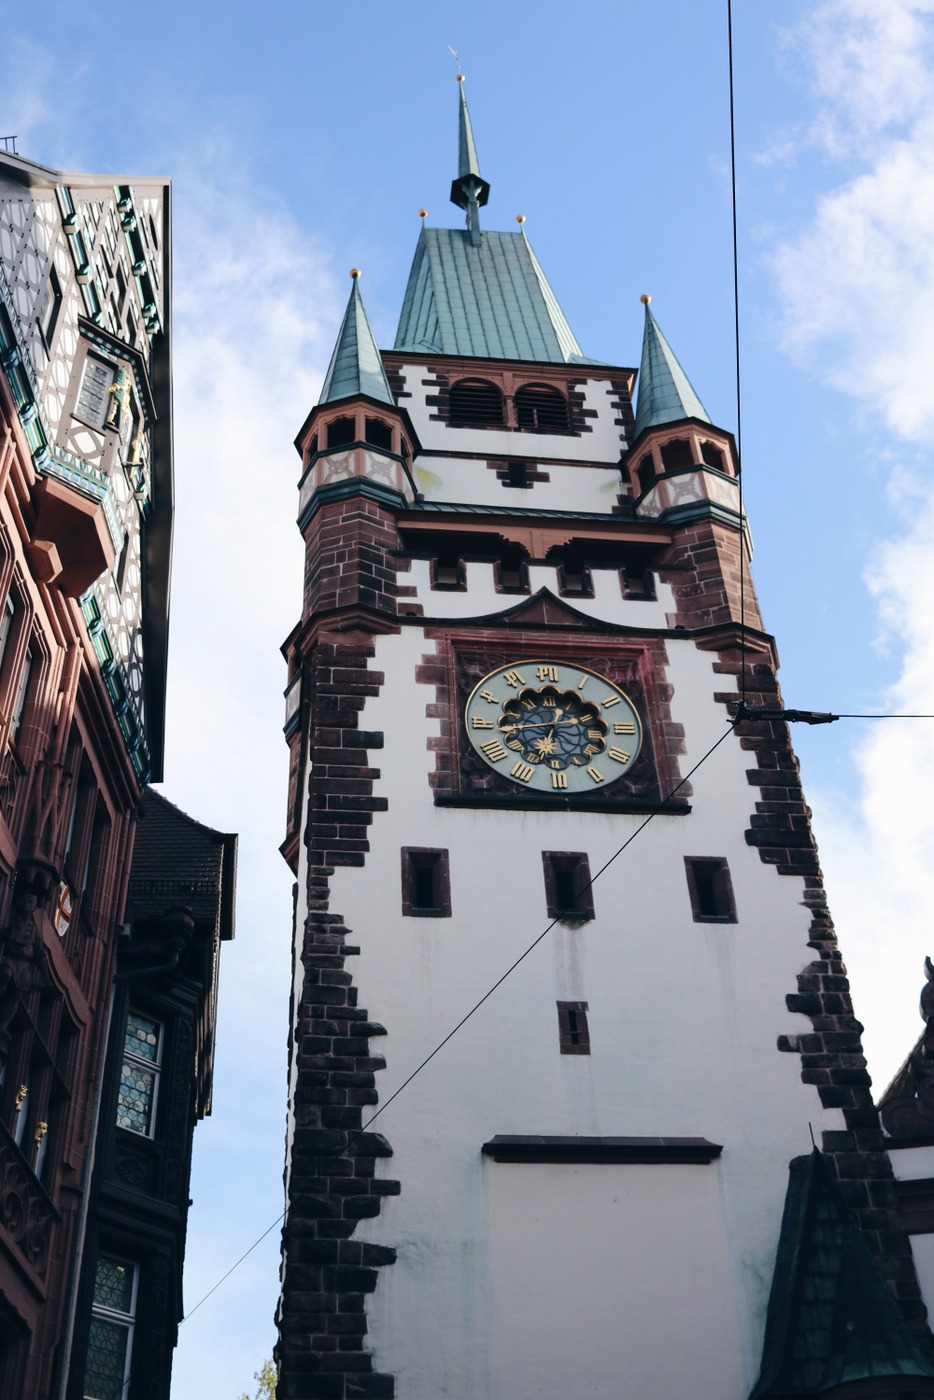 Freiburg-mrs-brightside-rosavivi-instagram-blogger-travelblog-traveldiary-fotodiary-freiburg-im-breisgau-germany-deutschland-ausflug-kurztrip